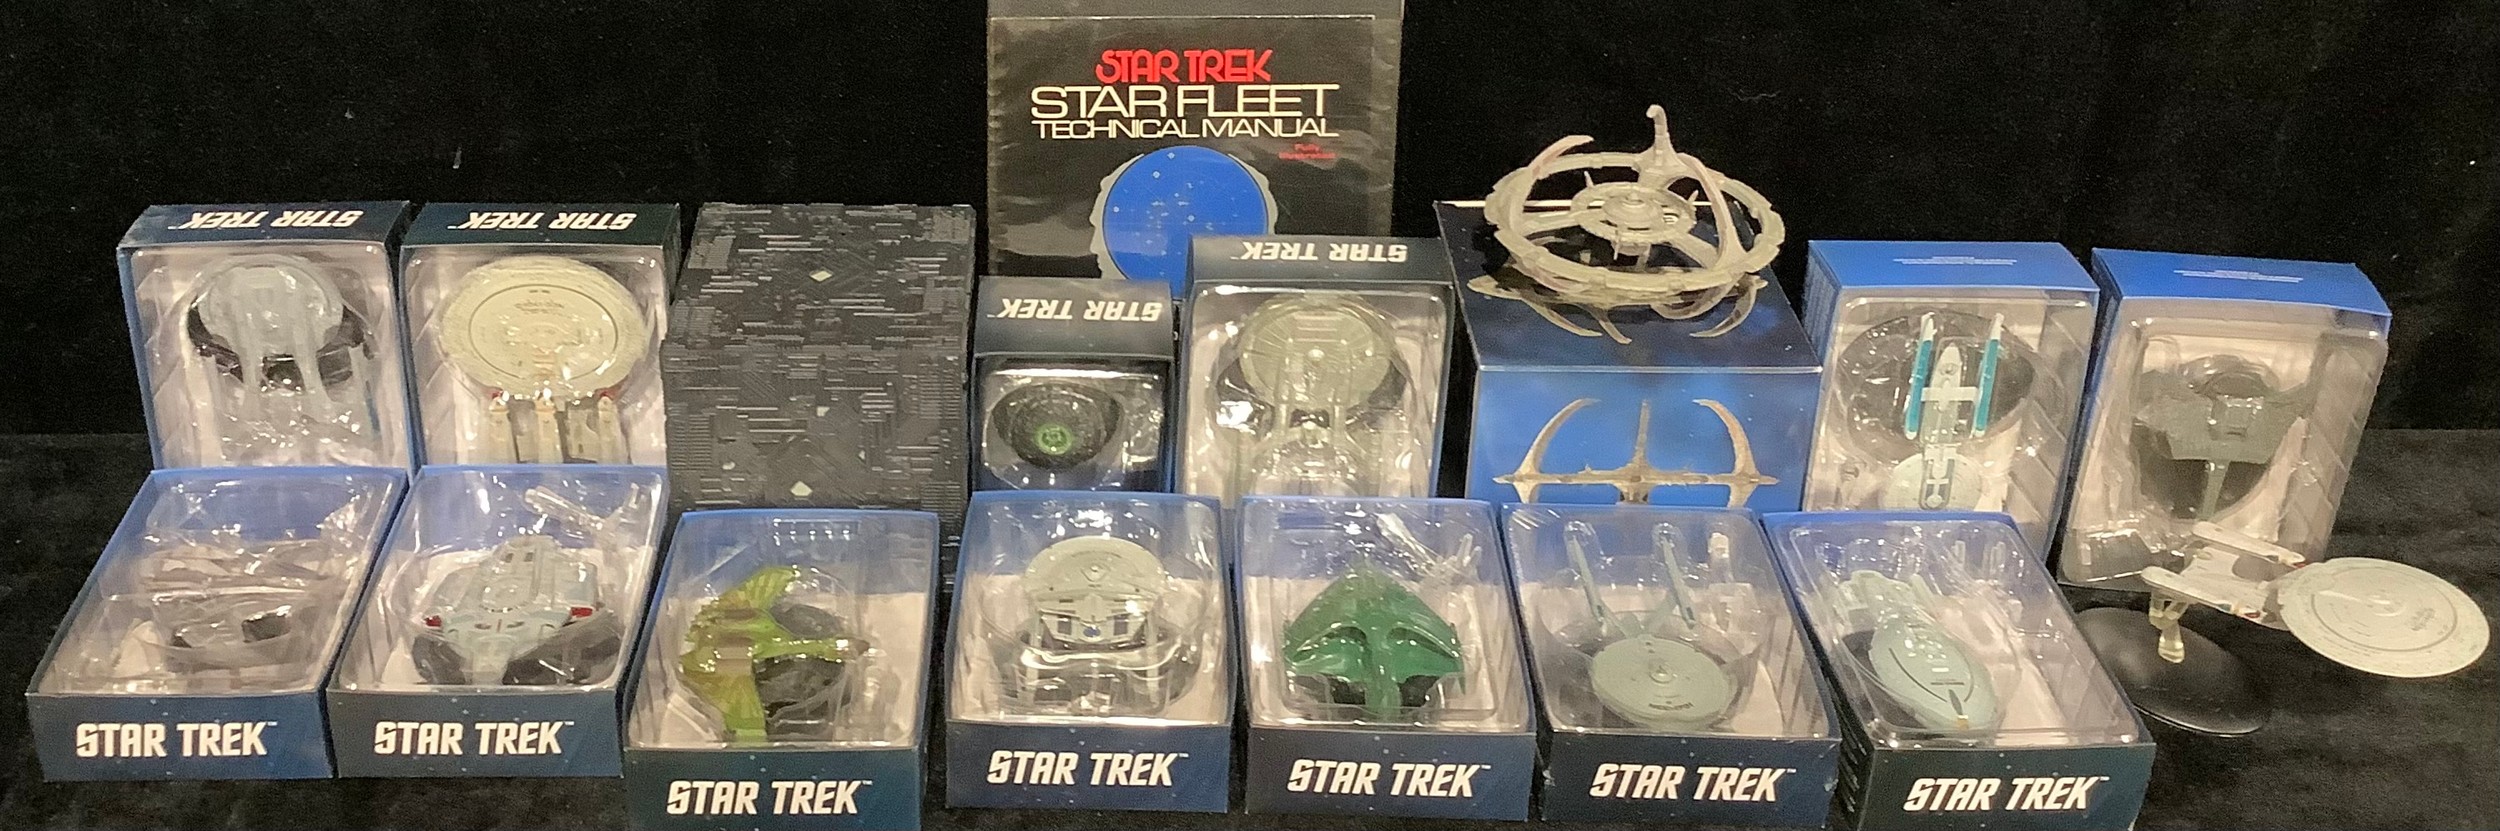 Toys & Juvenalia, Sci-Fi Interest - a collection of Eaglemoss Star Trek models; a Star Trek Star